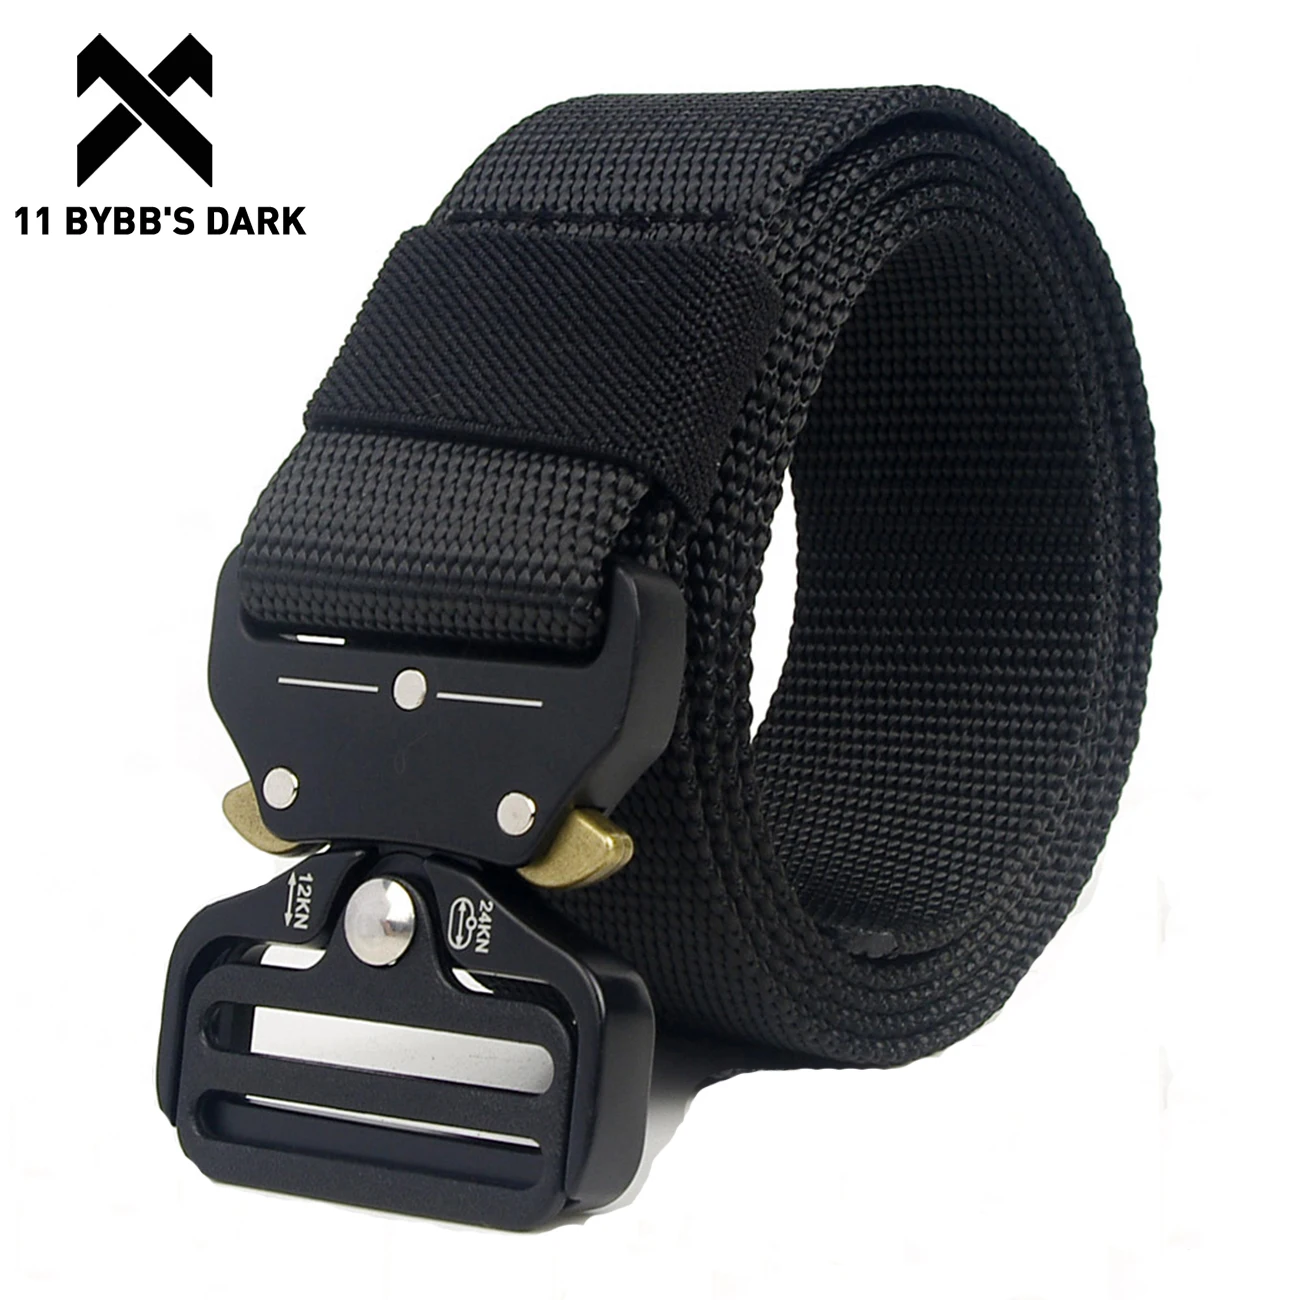 11 BYBB'S DARK Tactical Belt Men Adjustable Heavy Duty Military 2020 Fashion Streetwear Hunting Accessories Waist Metal Buckle